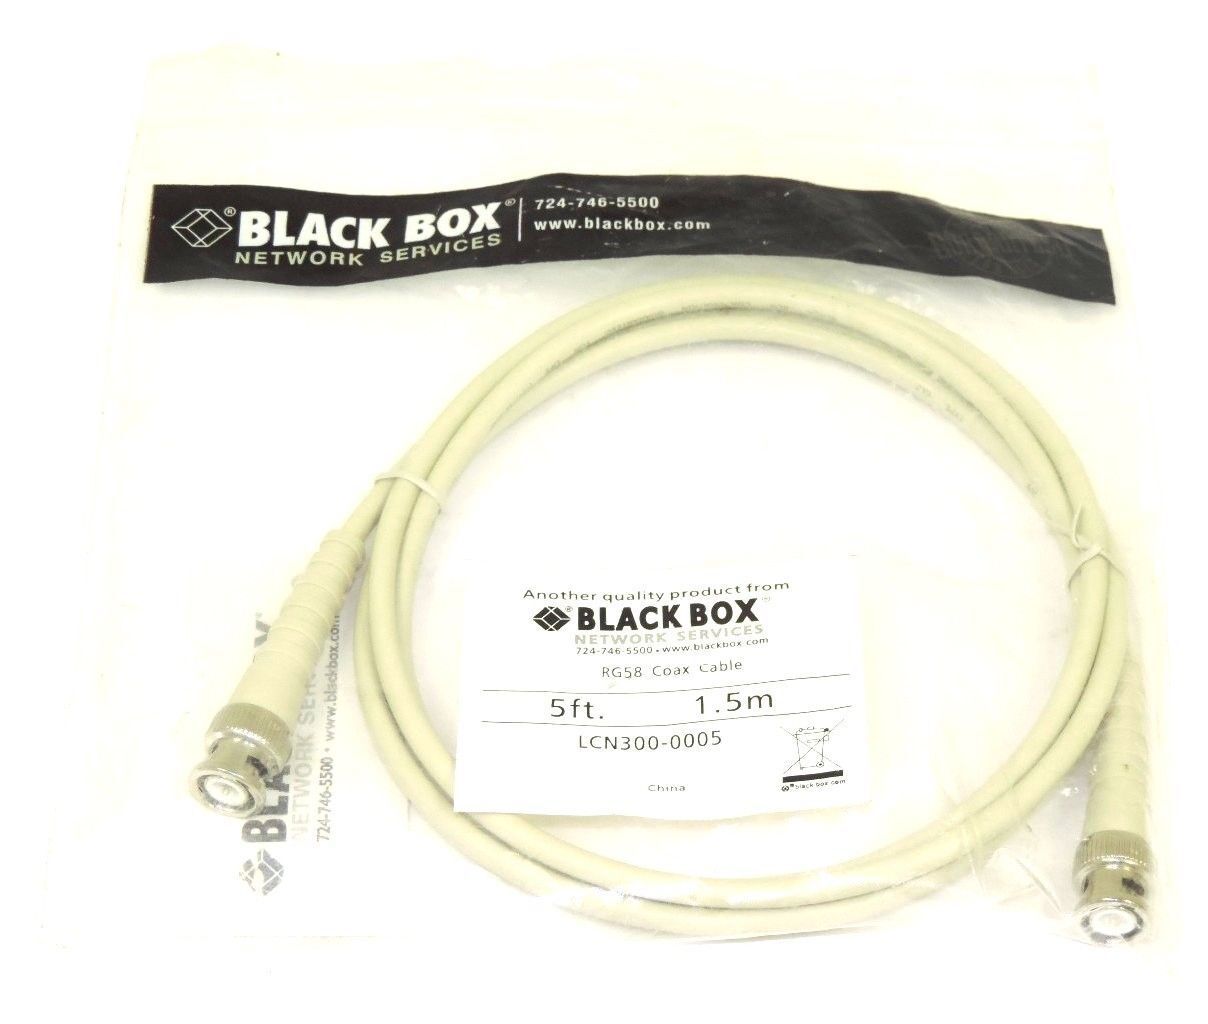 NIB BLACK BOX THIN NET RG58 COAX CABLE 5FT LCN300-0005